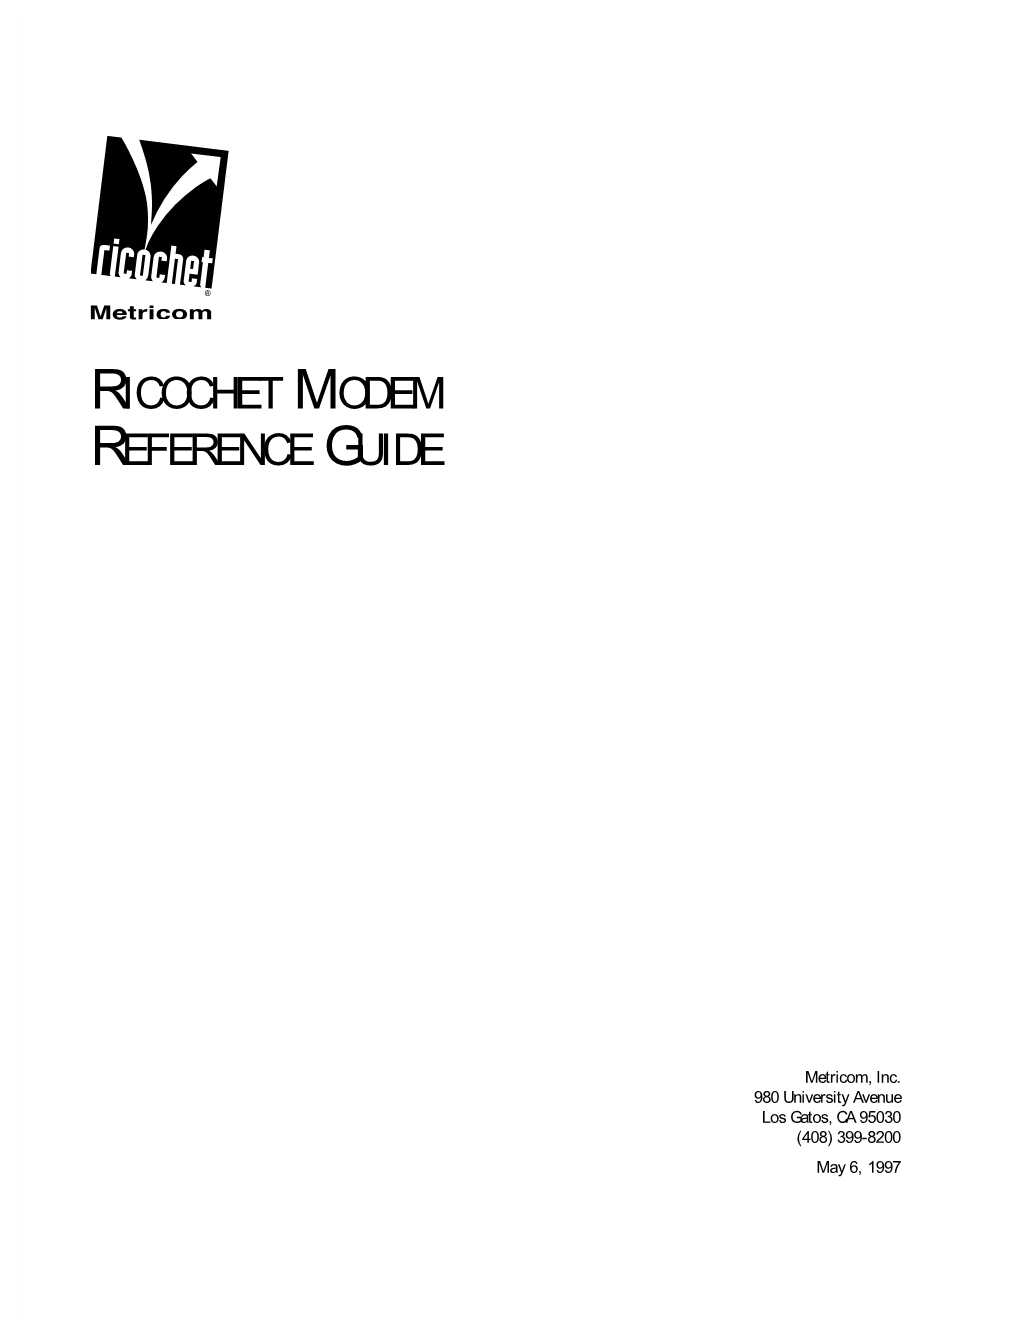 Metricom Ricochet Modem Reference Guide